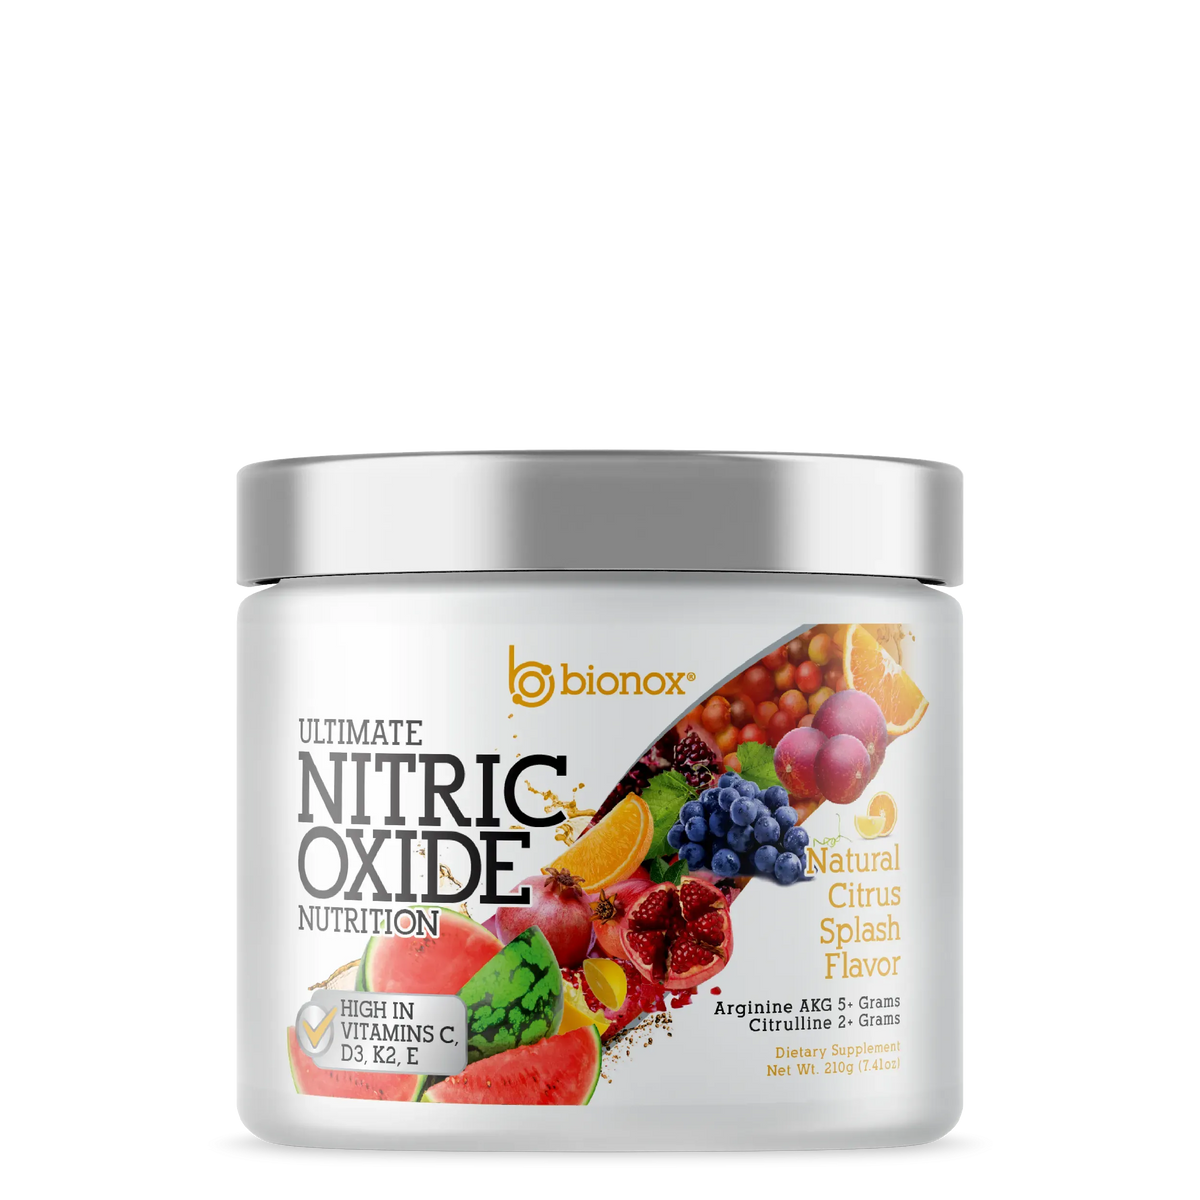 Ultimate Nitric Oxide Nutrition Citrus Splash Flavor - Small - 15 Days